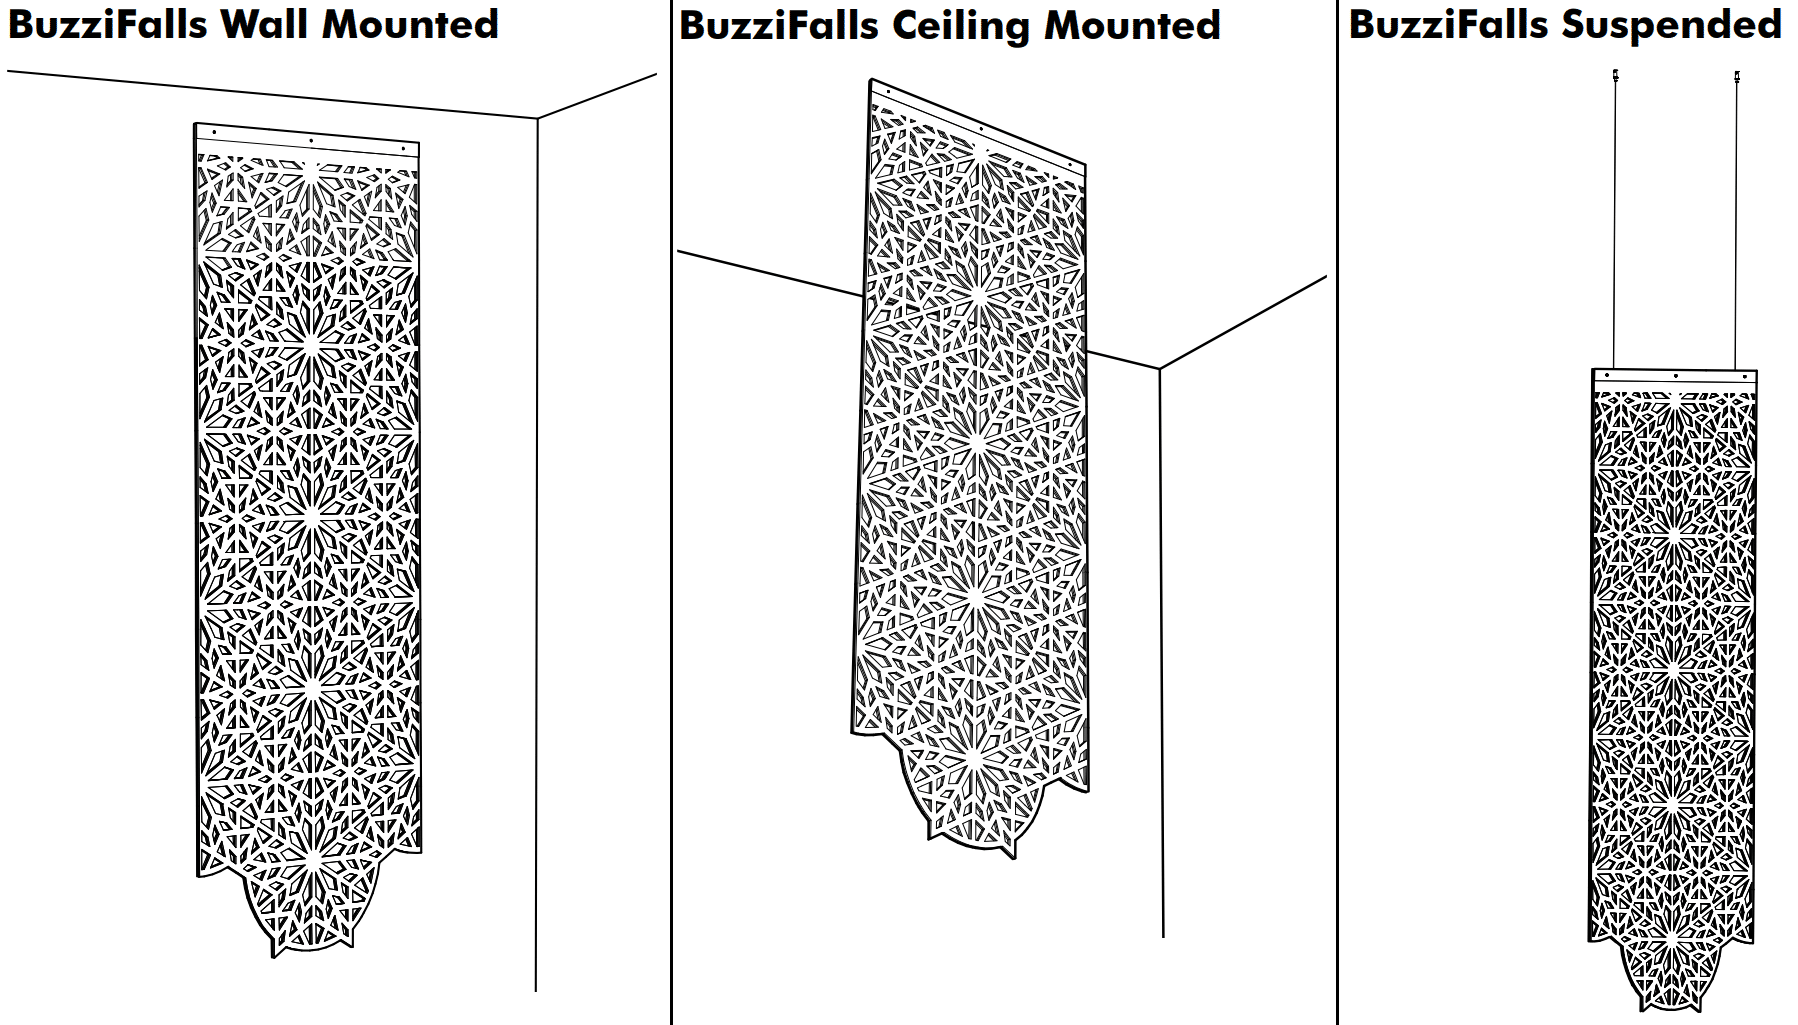 buzzifalls-montage